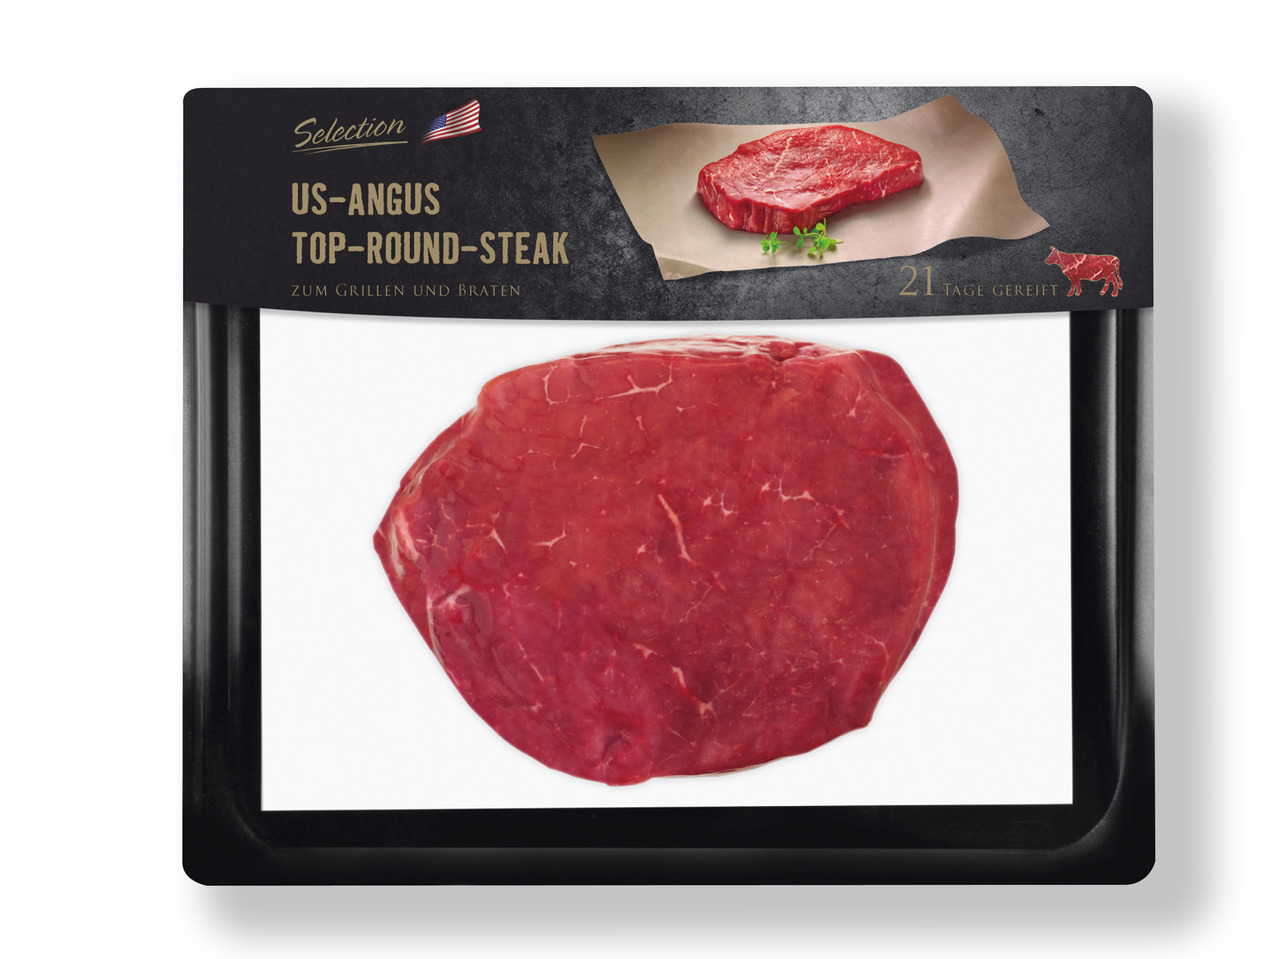 Angus steak